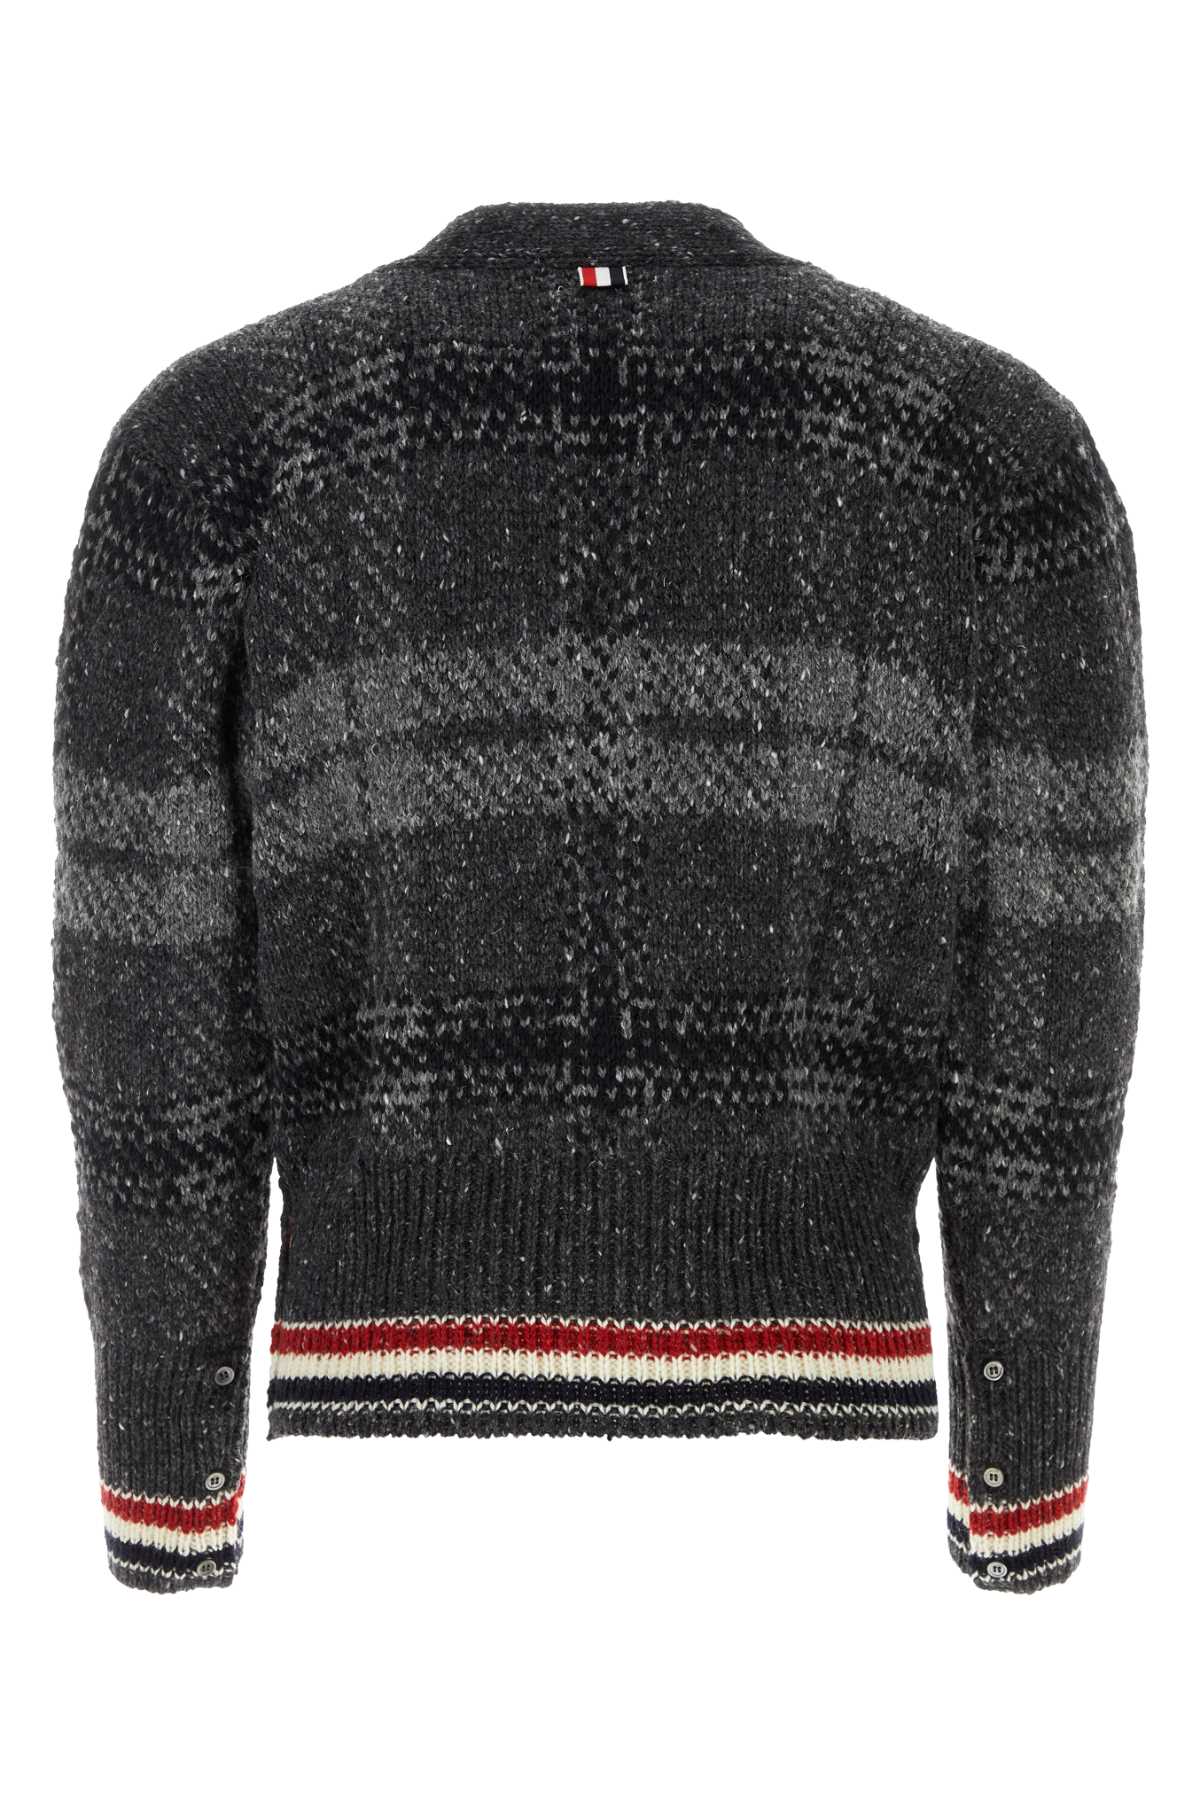 Thom Browne Embroidered Wool Blend Cardigan In Darkgrey